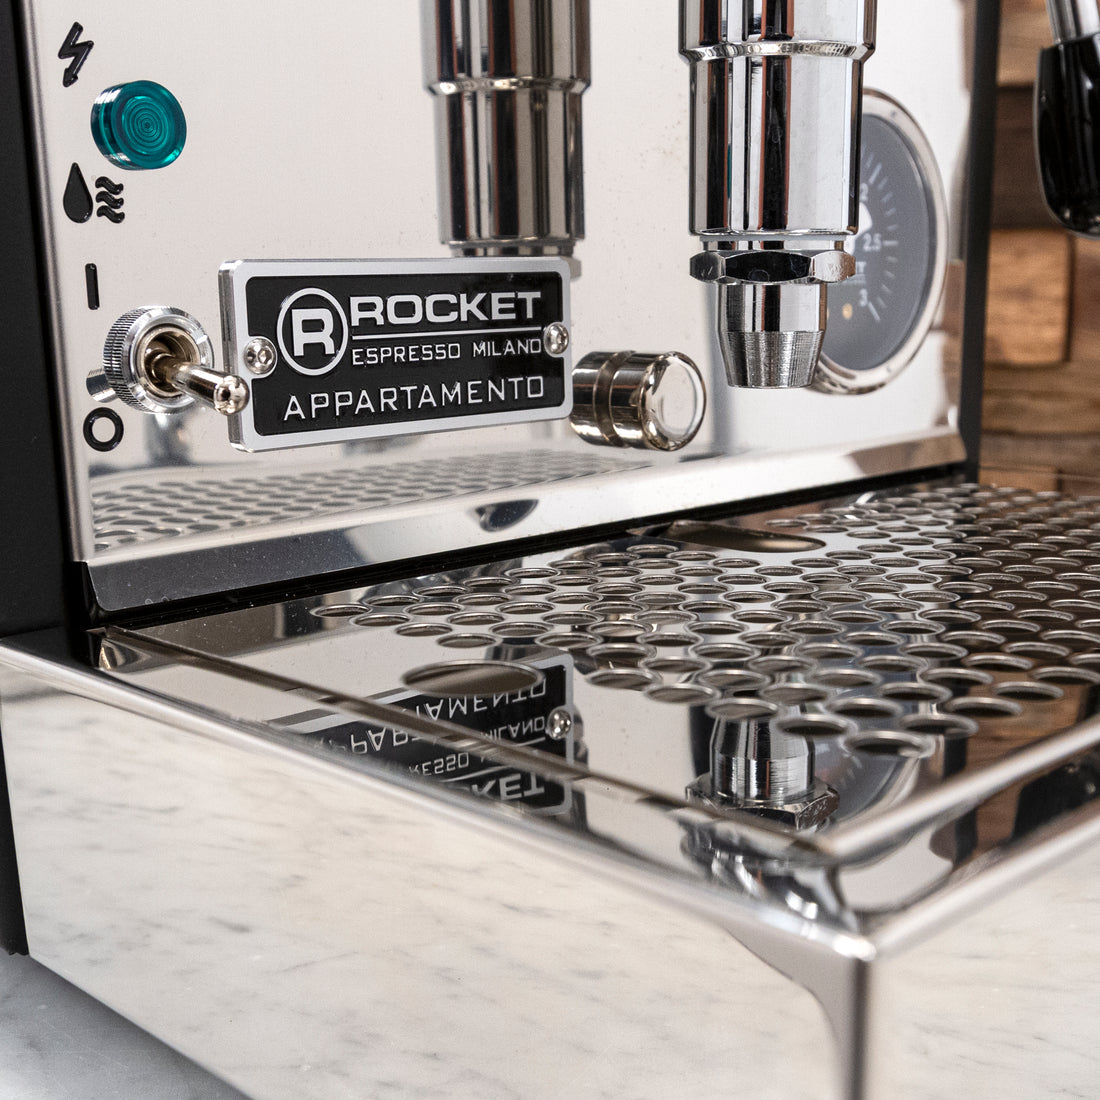 Rocket Espresso Appartamento Serie Nera Espresso Machine - Zebrawood